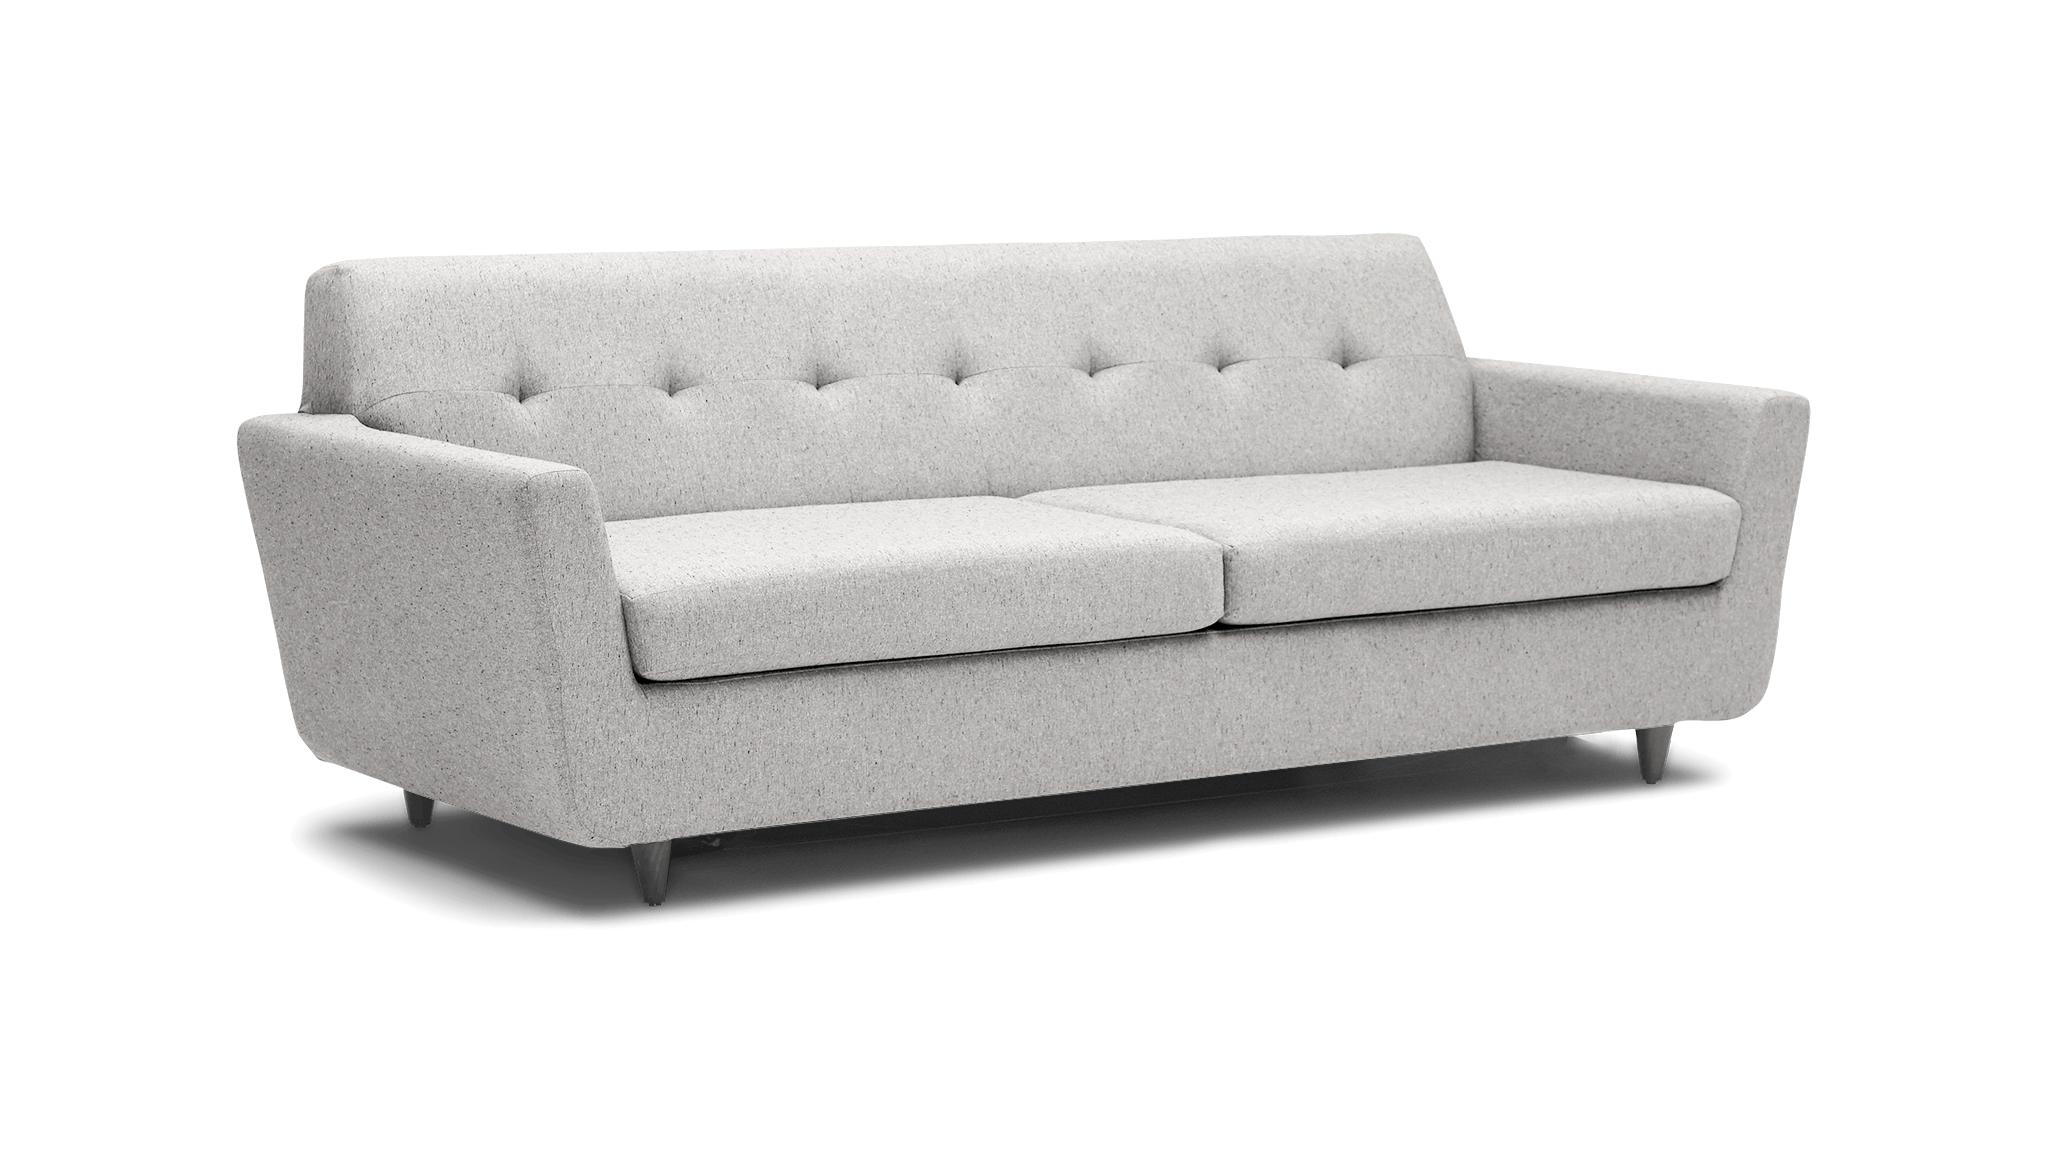 Gray Hughes Mid Century Modern Sleeper Sofa - Sunbrella Premier Fog - Mocha - Image 1